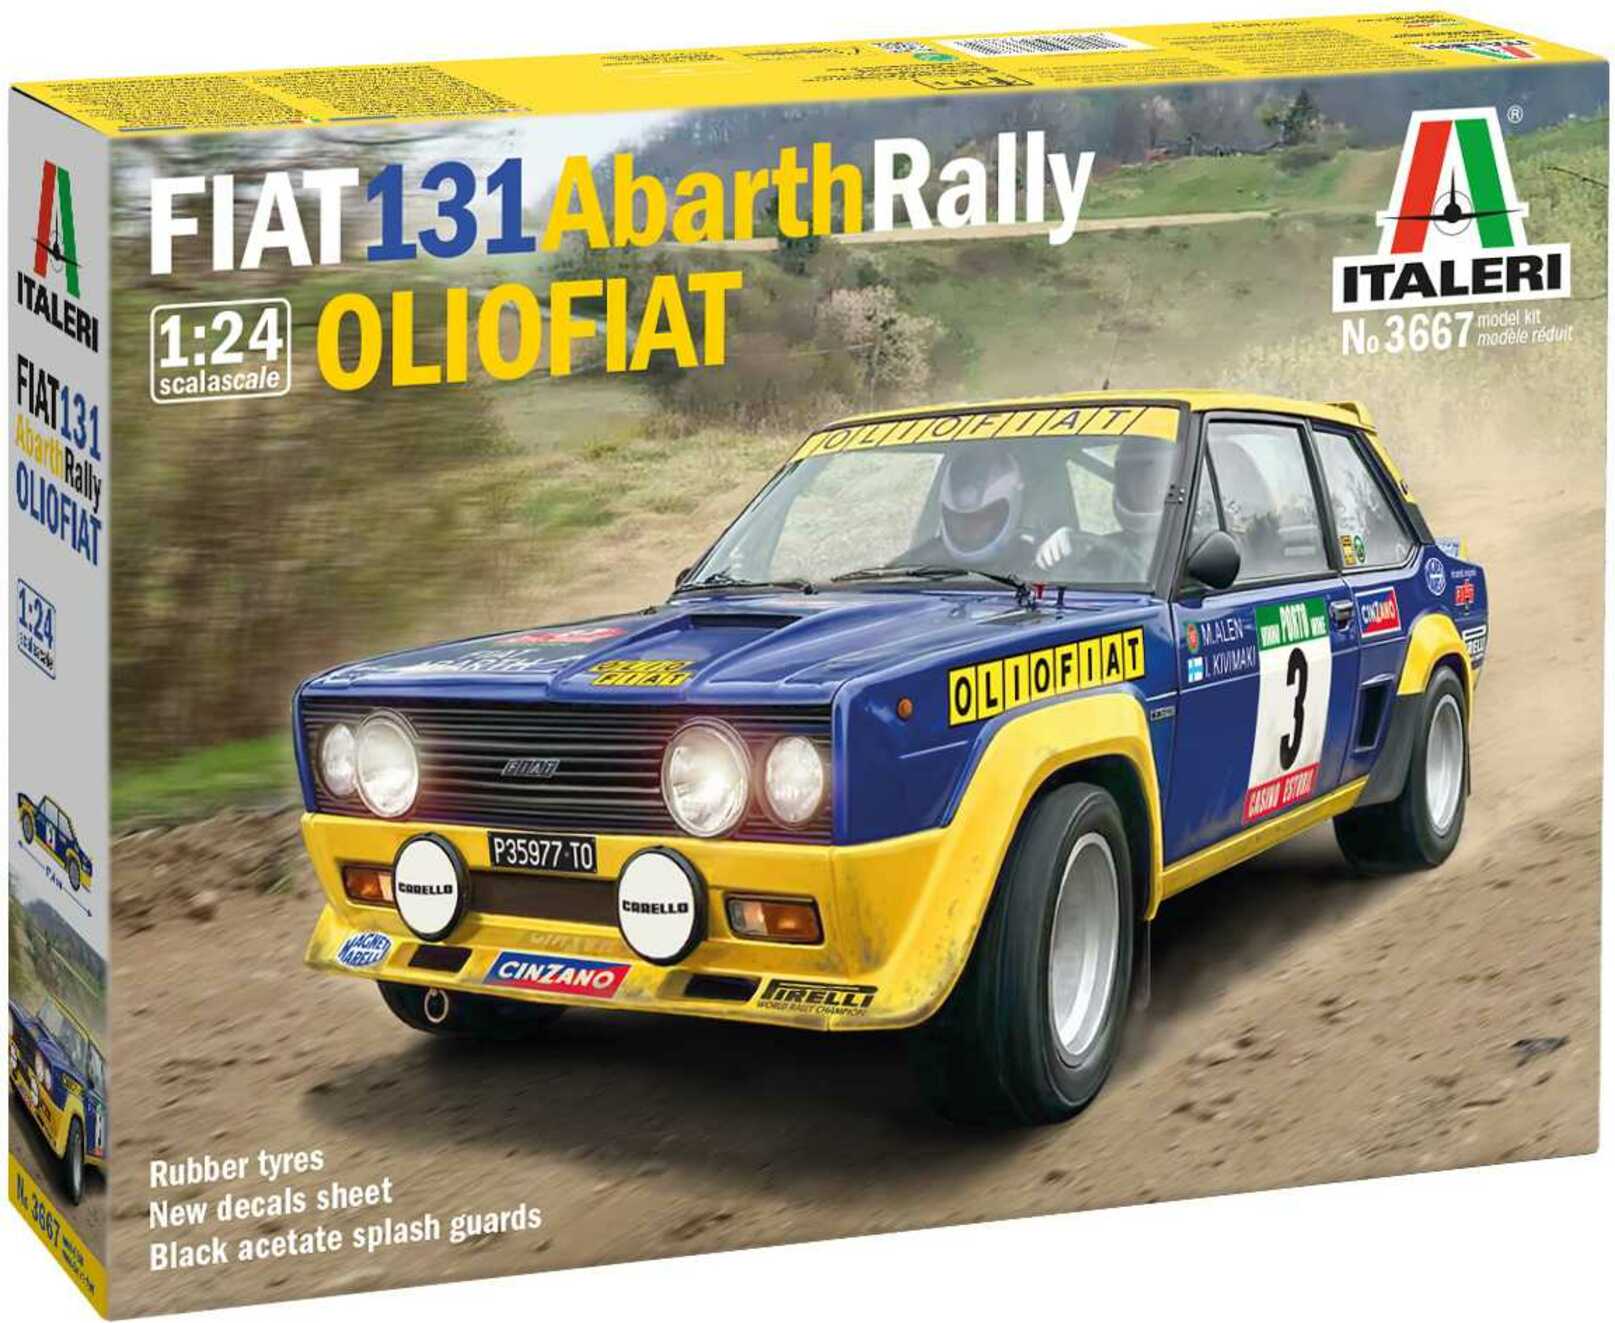 Modellbausatzauto 3667 - FIAT 131 Abarth Rally OLIO FIAT (1:24) - Autos